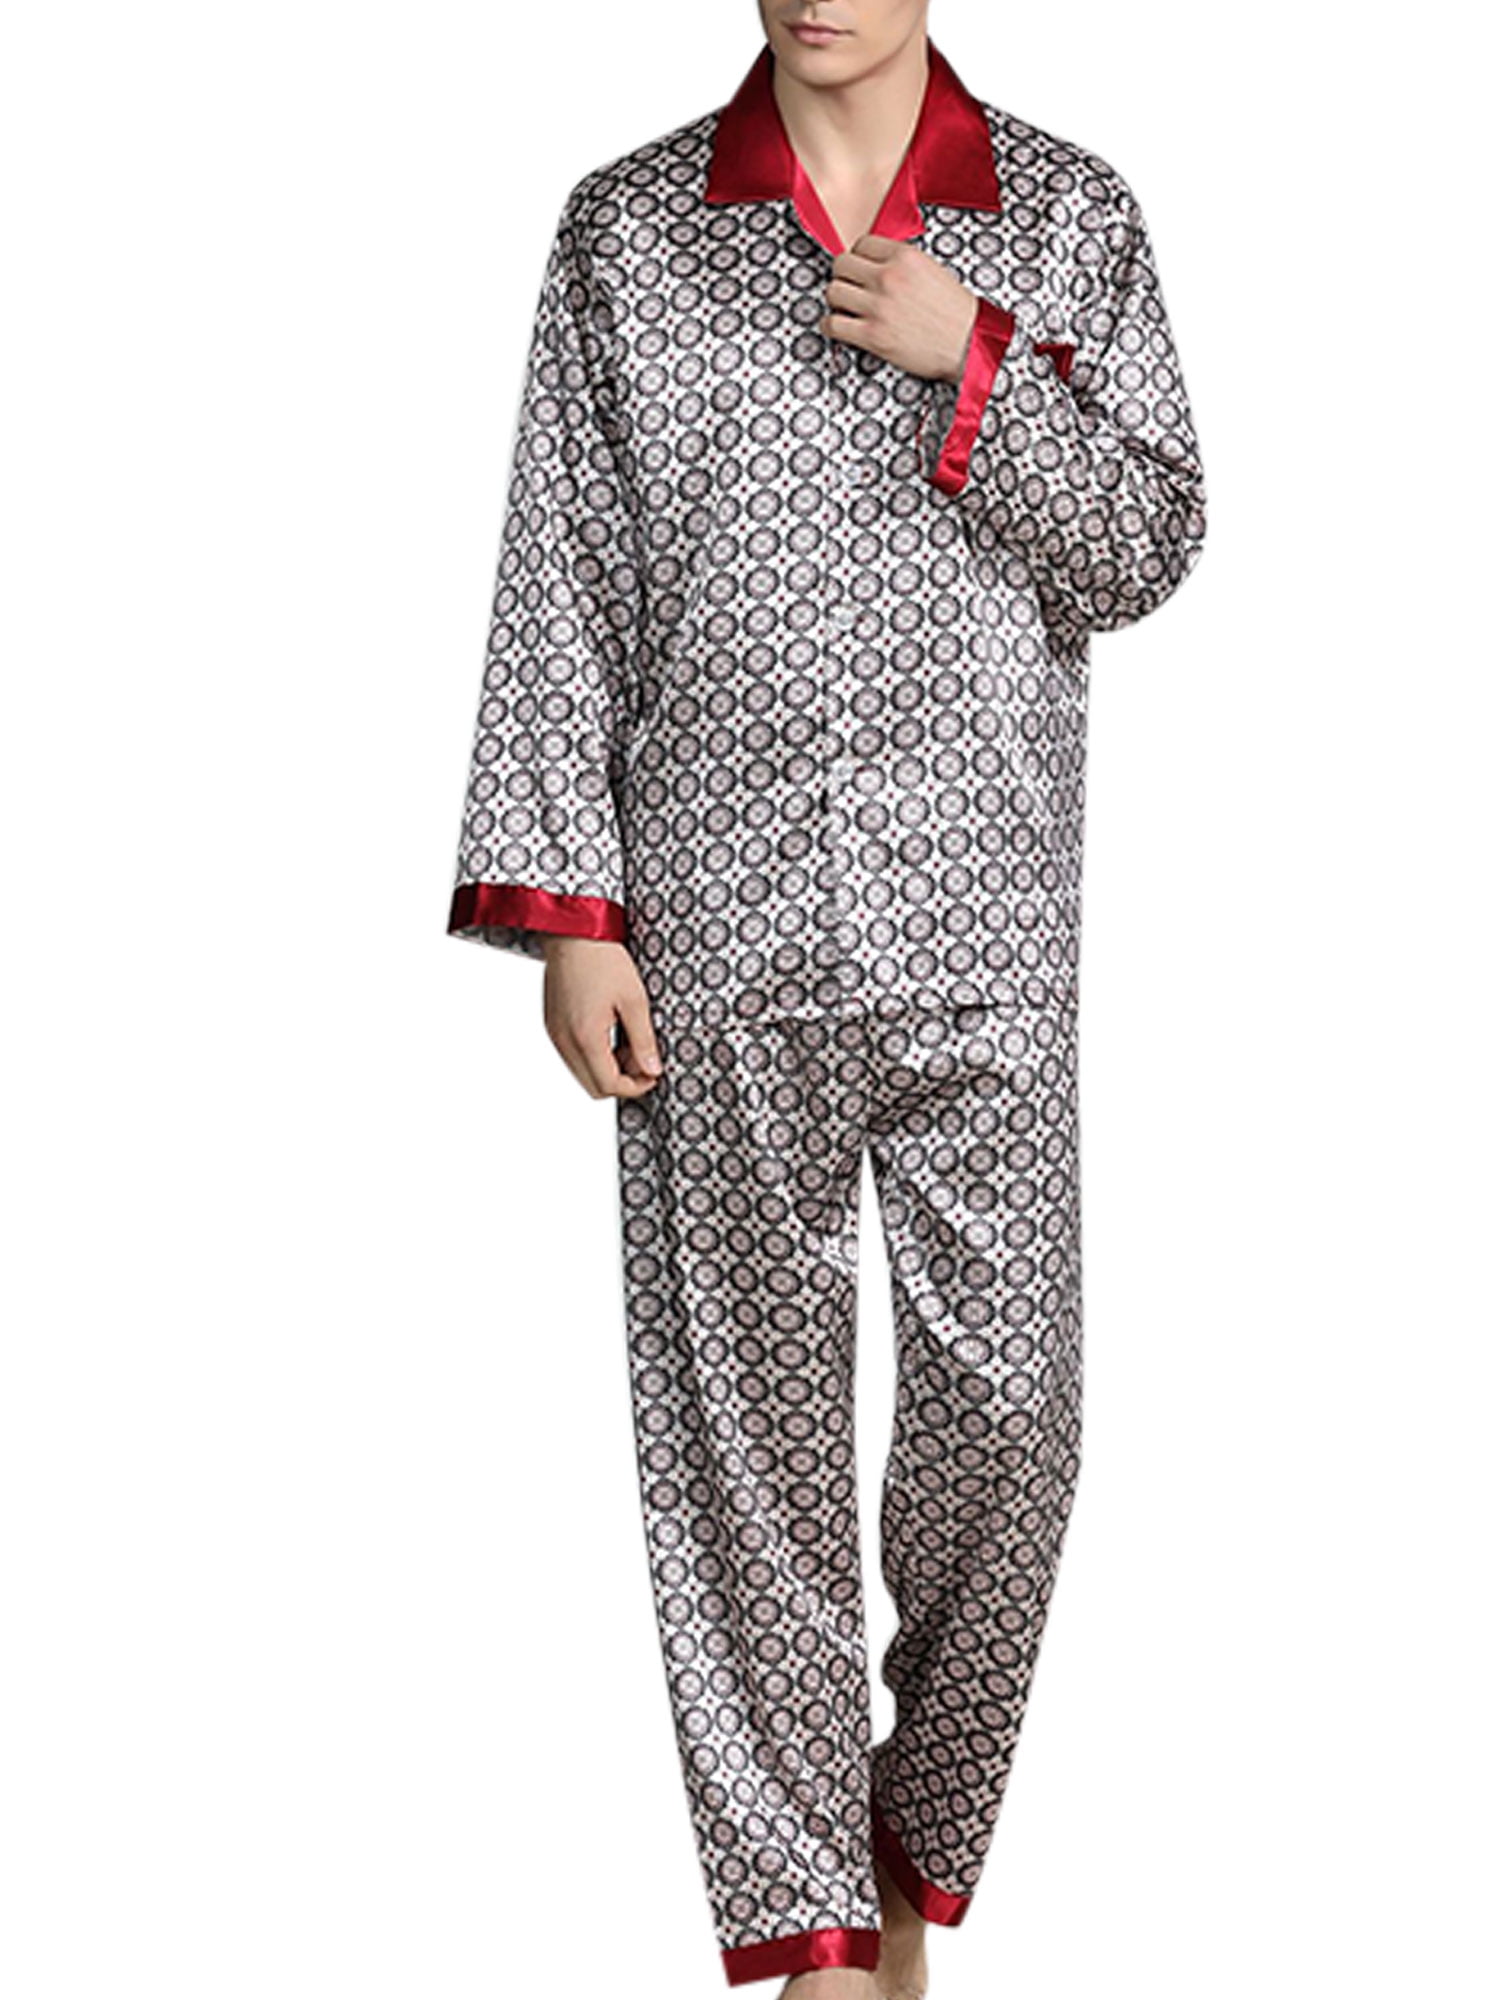 Avamo Mens Fashion Floral Print Stain Silk Pajamas Set Long Sleeve Sleepwear  Shirts and Pants Lounge Bath Homewear Nightwear 